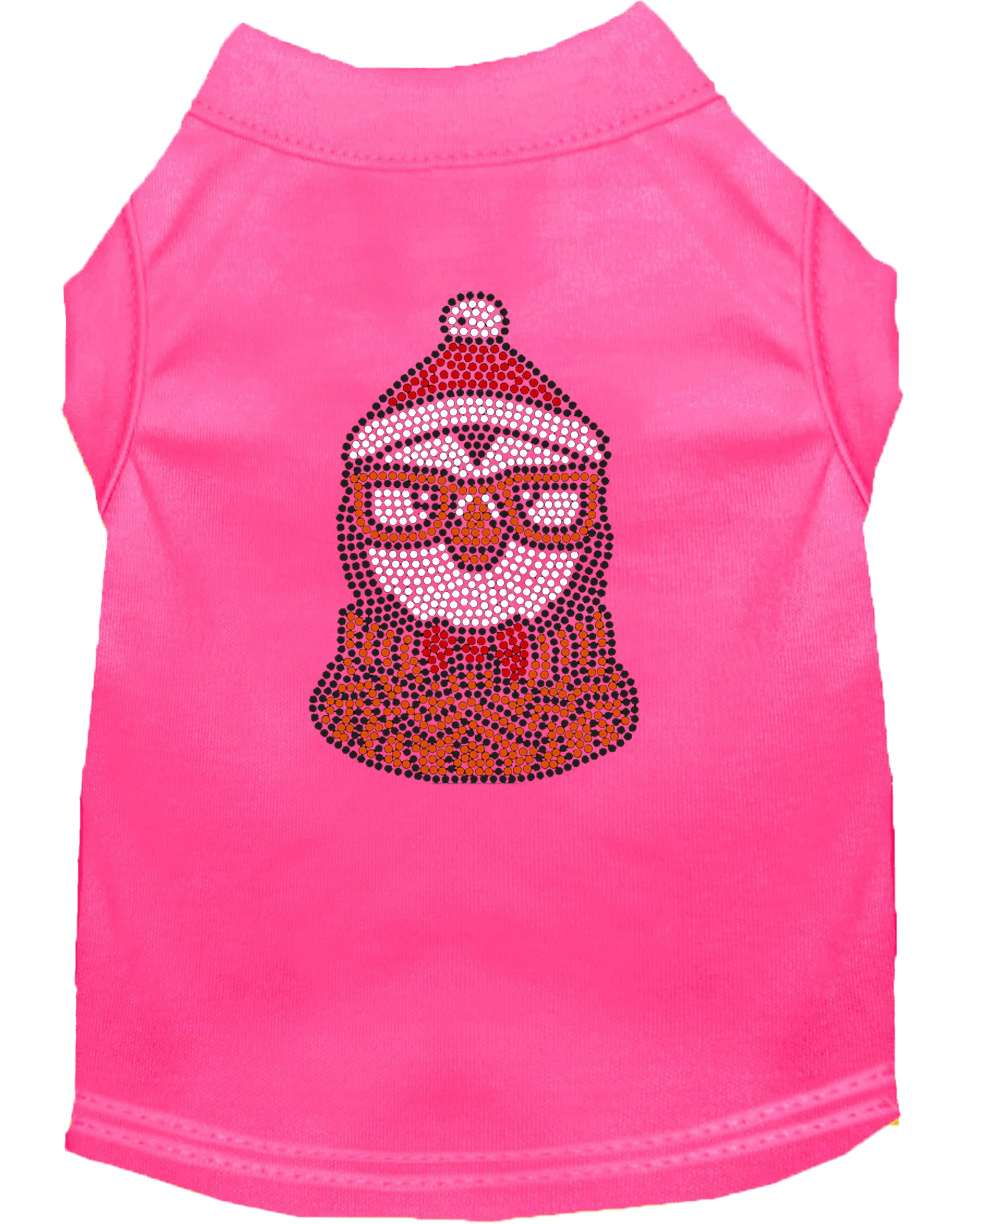 Hipster Penguin Rhinestone Dog Shirt Bright Pink Sm